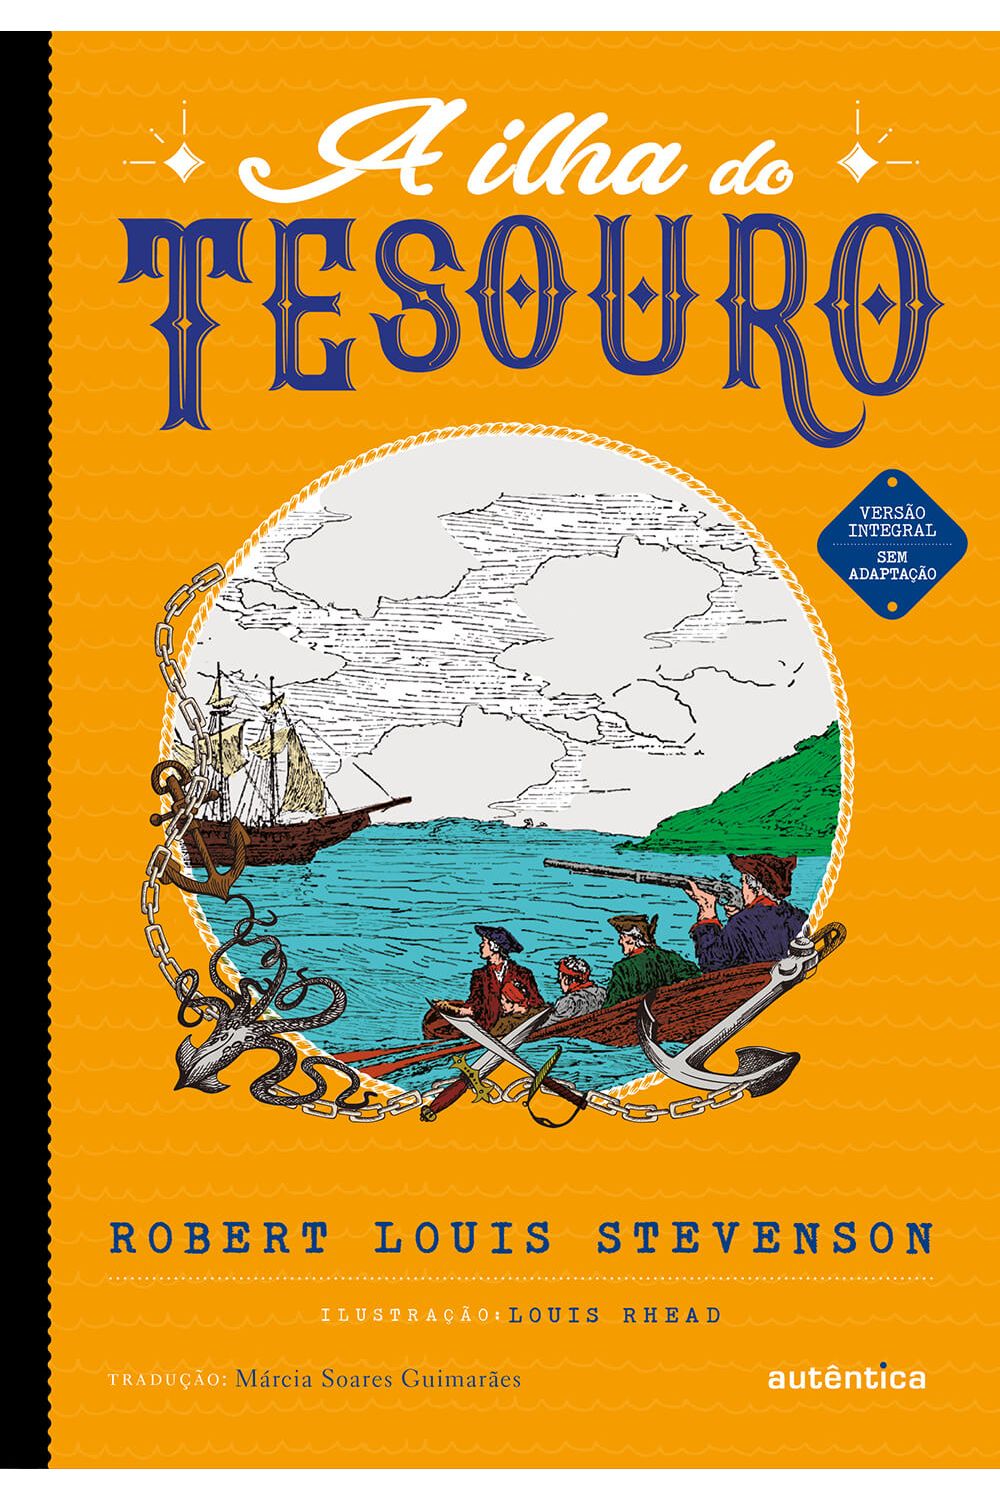 A ilha do tesouro, Robert Louis Stevenson by Editora FTD - Issuu